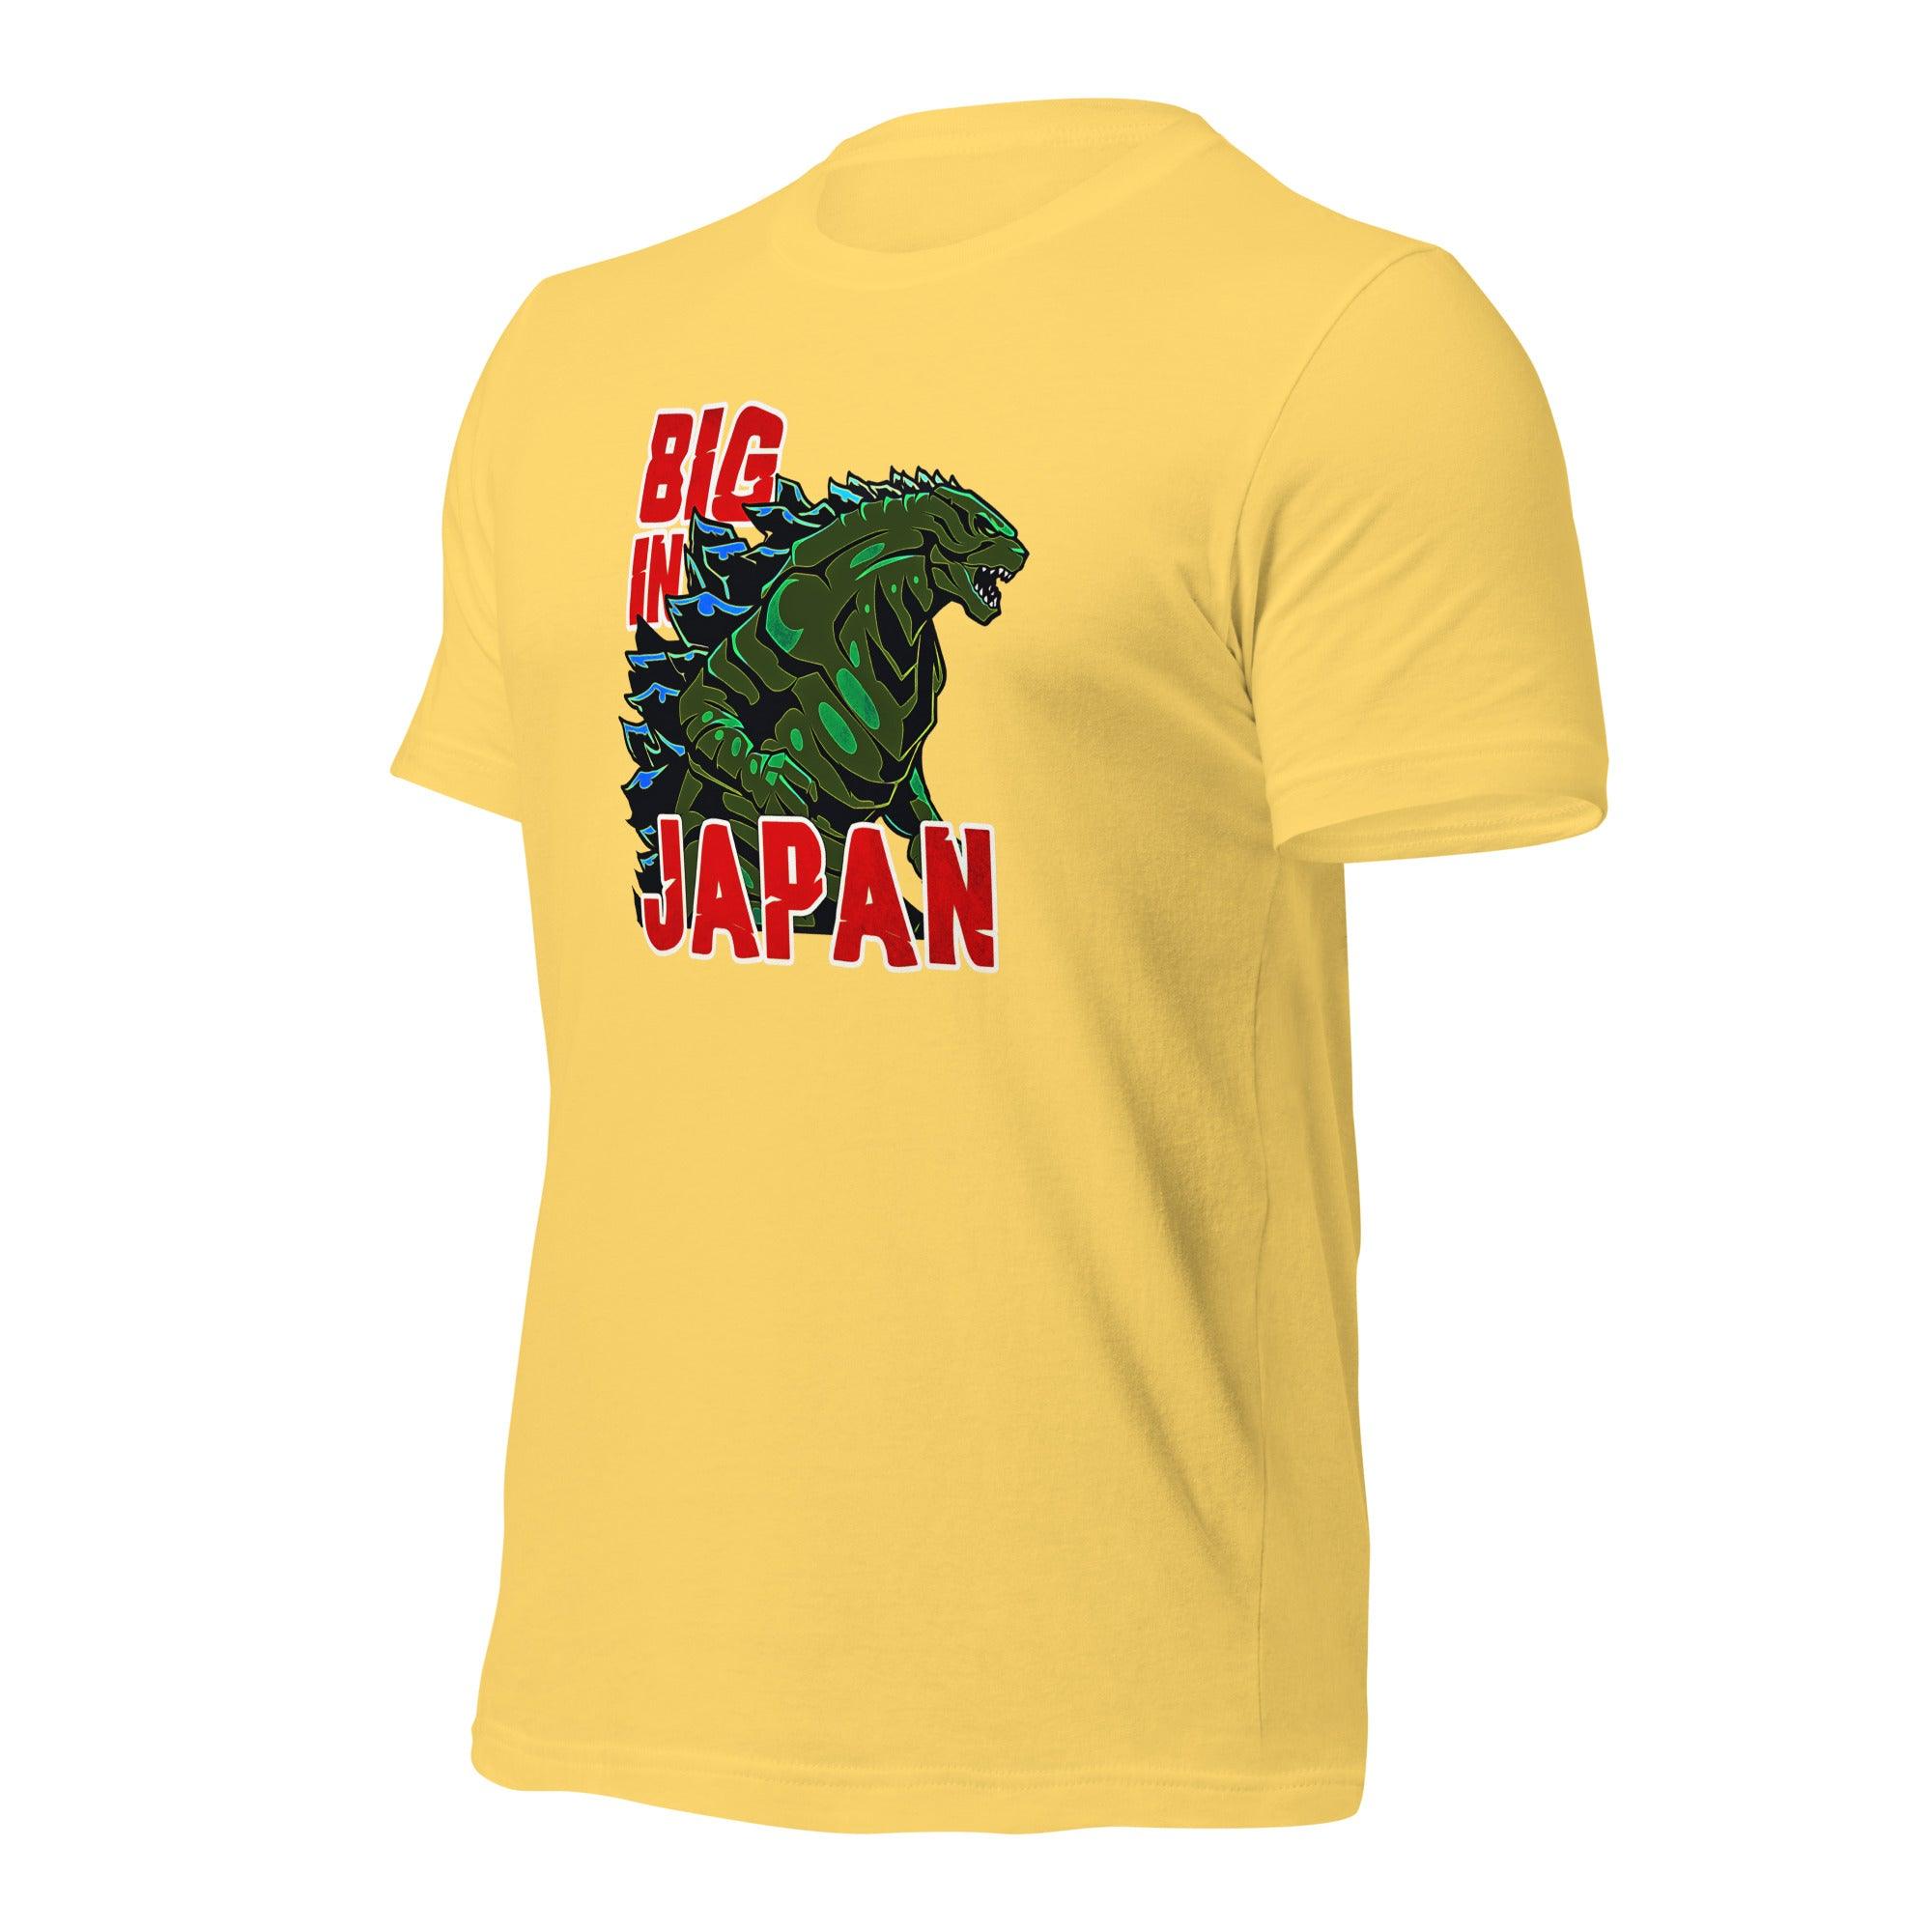 Big In Japan! Unisex t-shirt